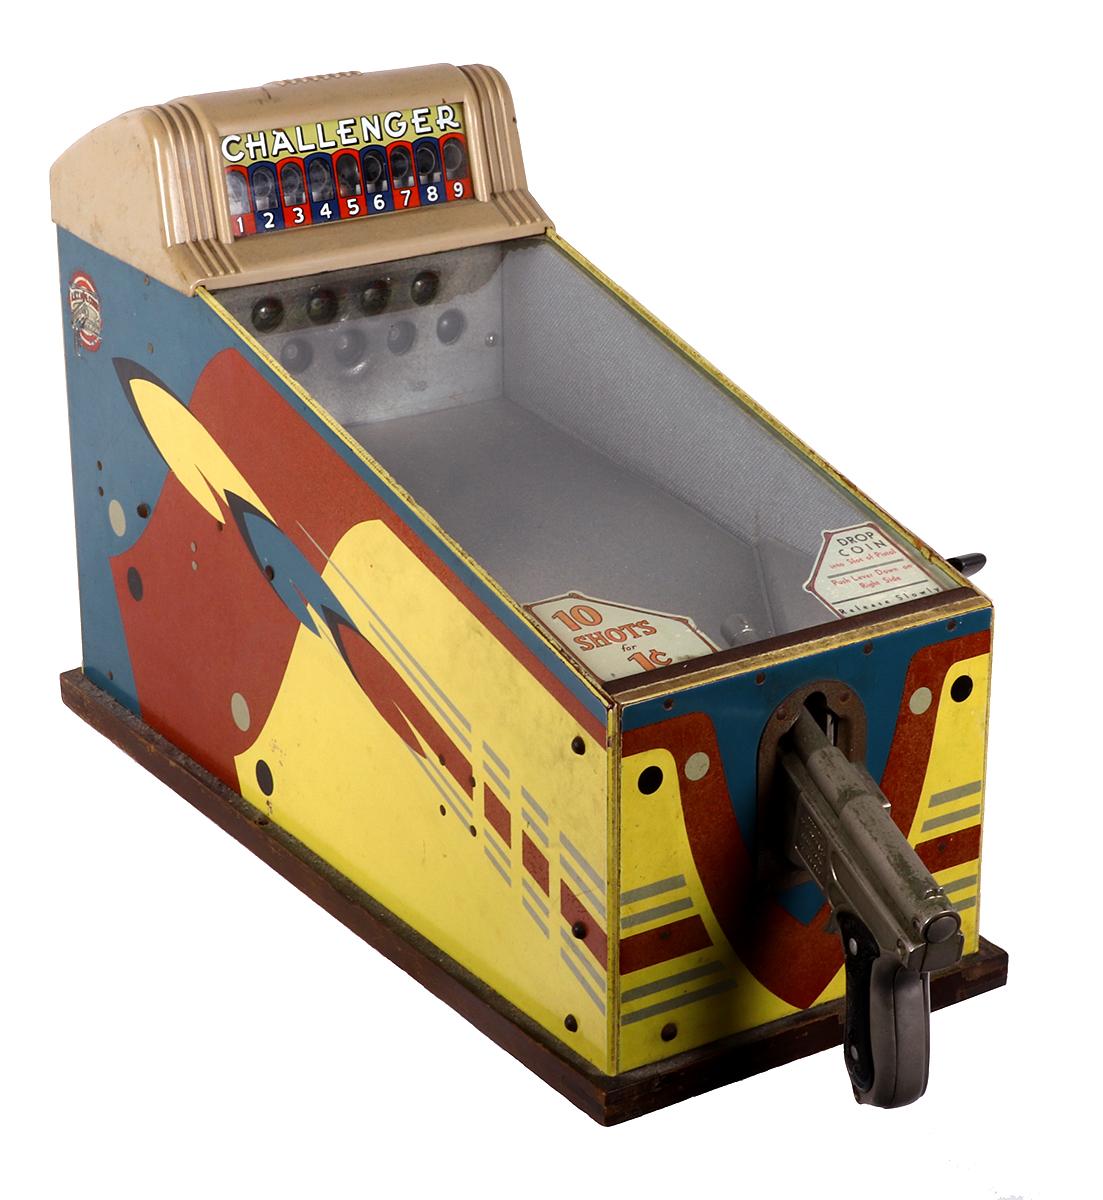 classic shooting arcade games